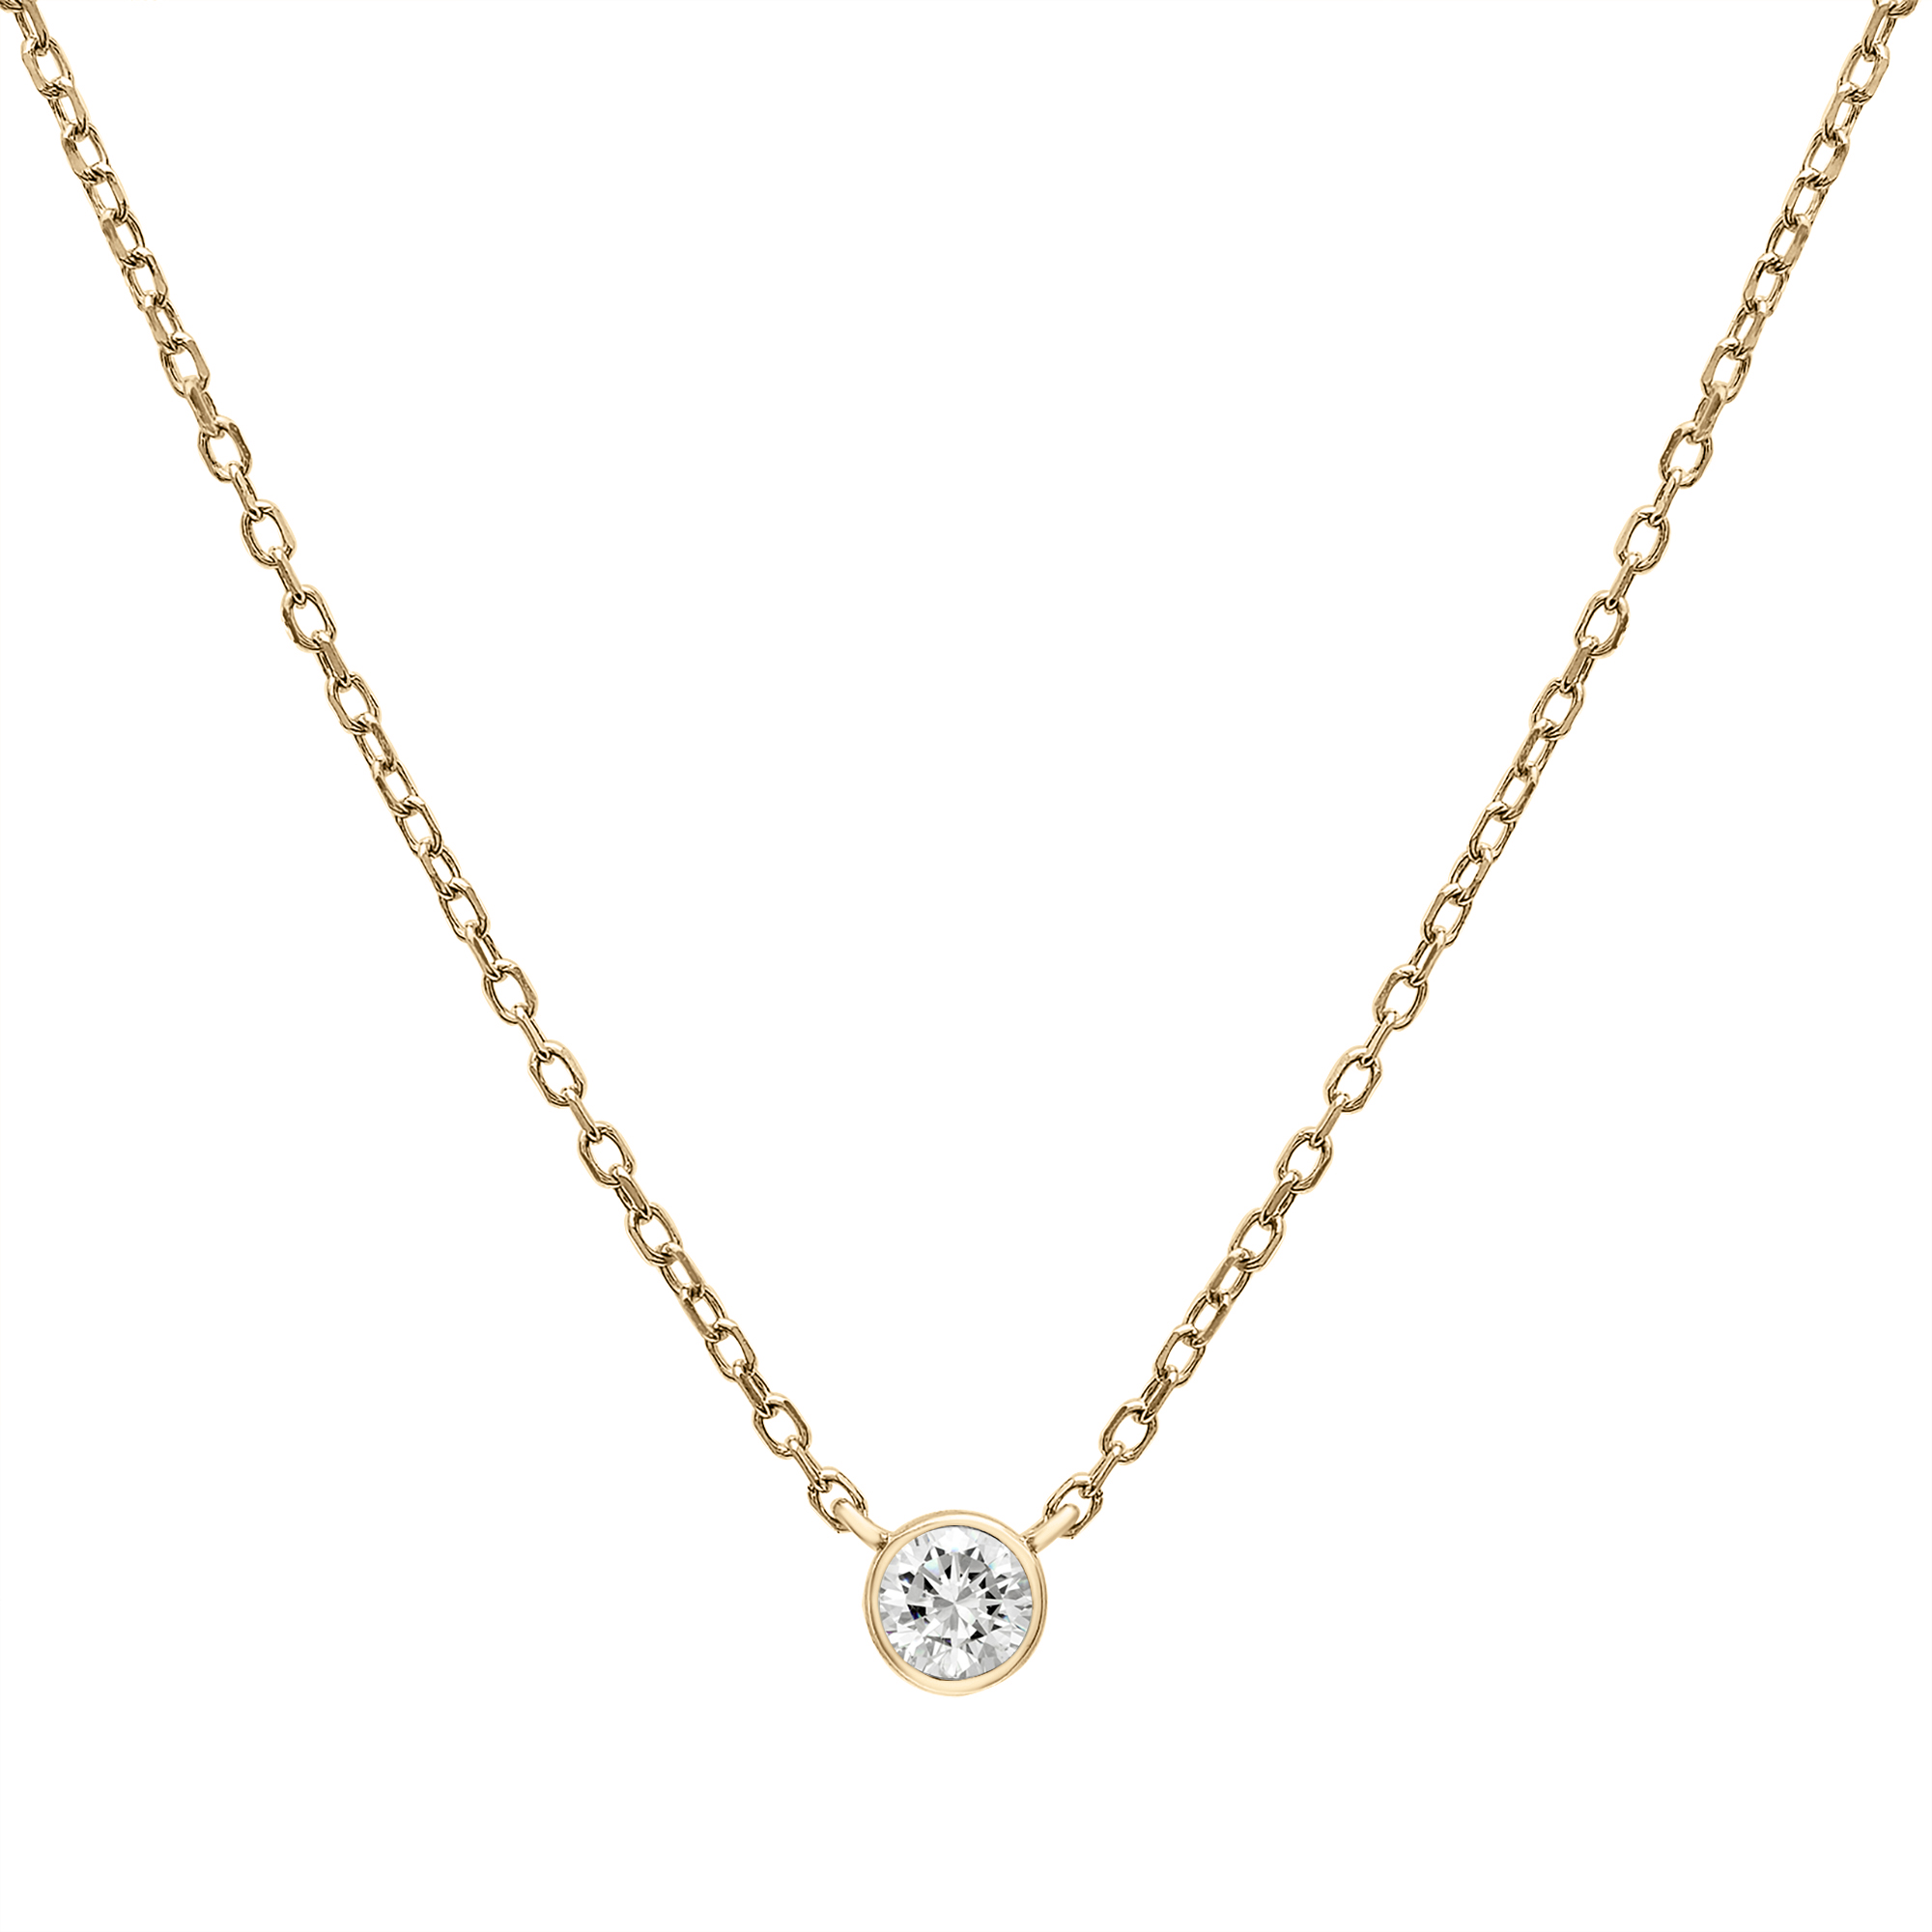 Diamond Soliatire Necklace, Round Diamond, 1 Carat, 18K White Gold